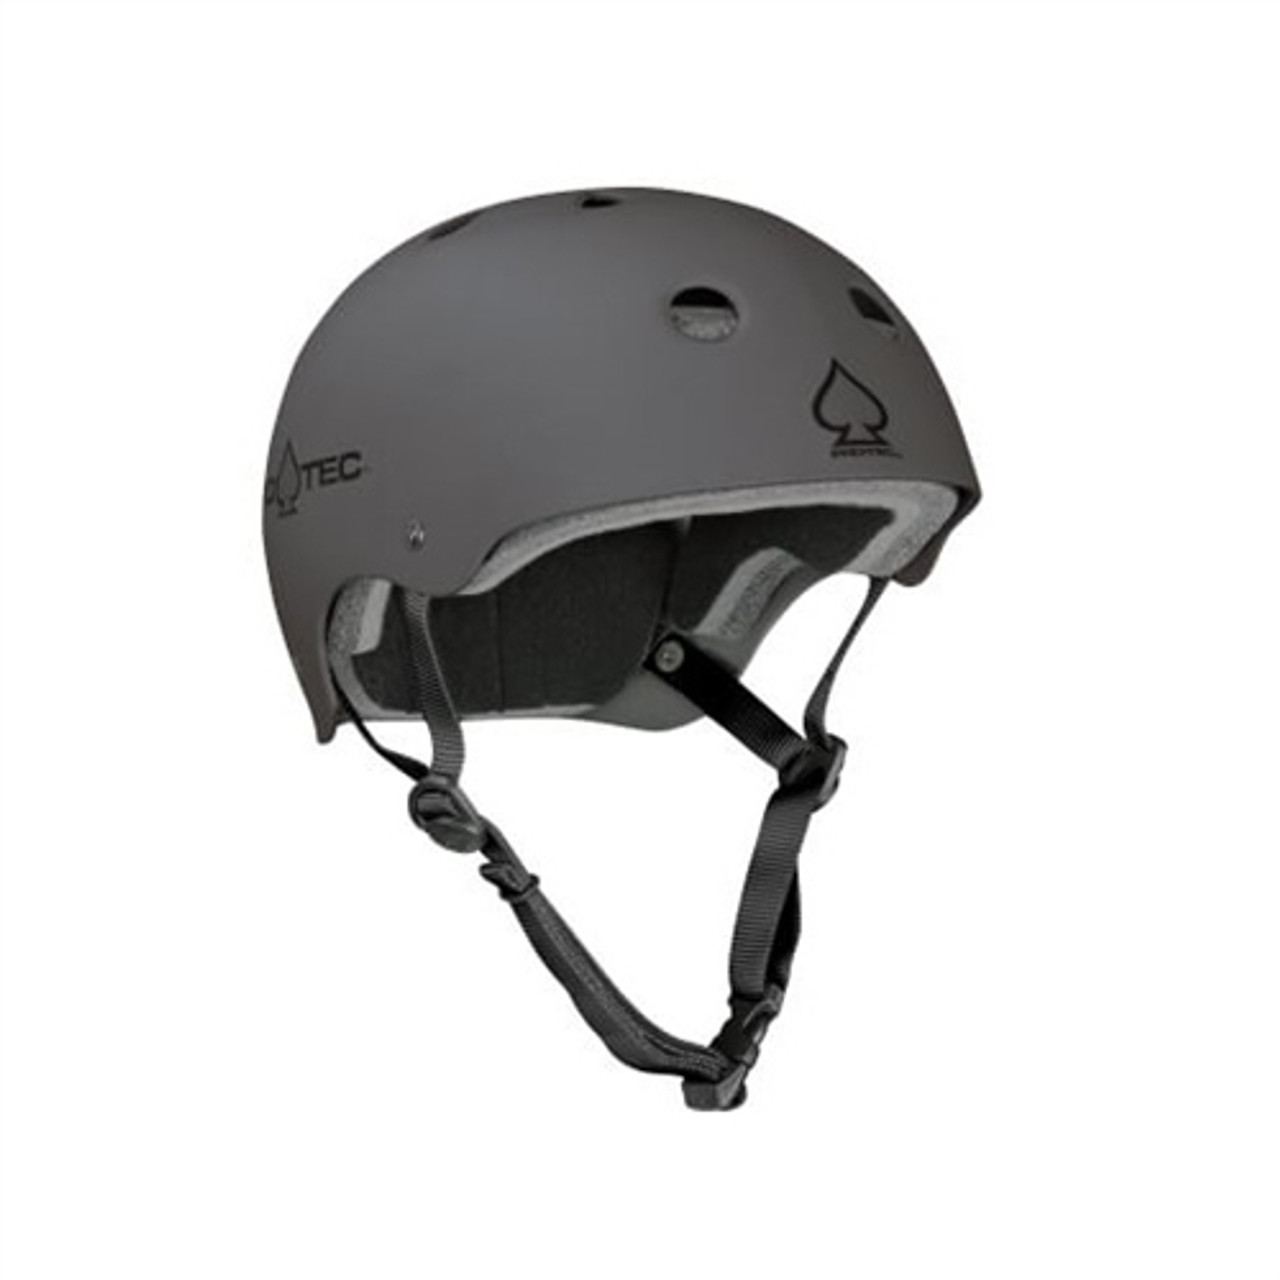 Protec Classic Skate Helmet Matte Grey XS